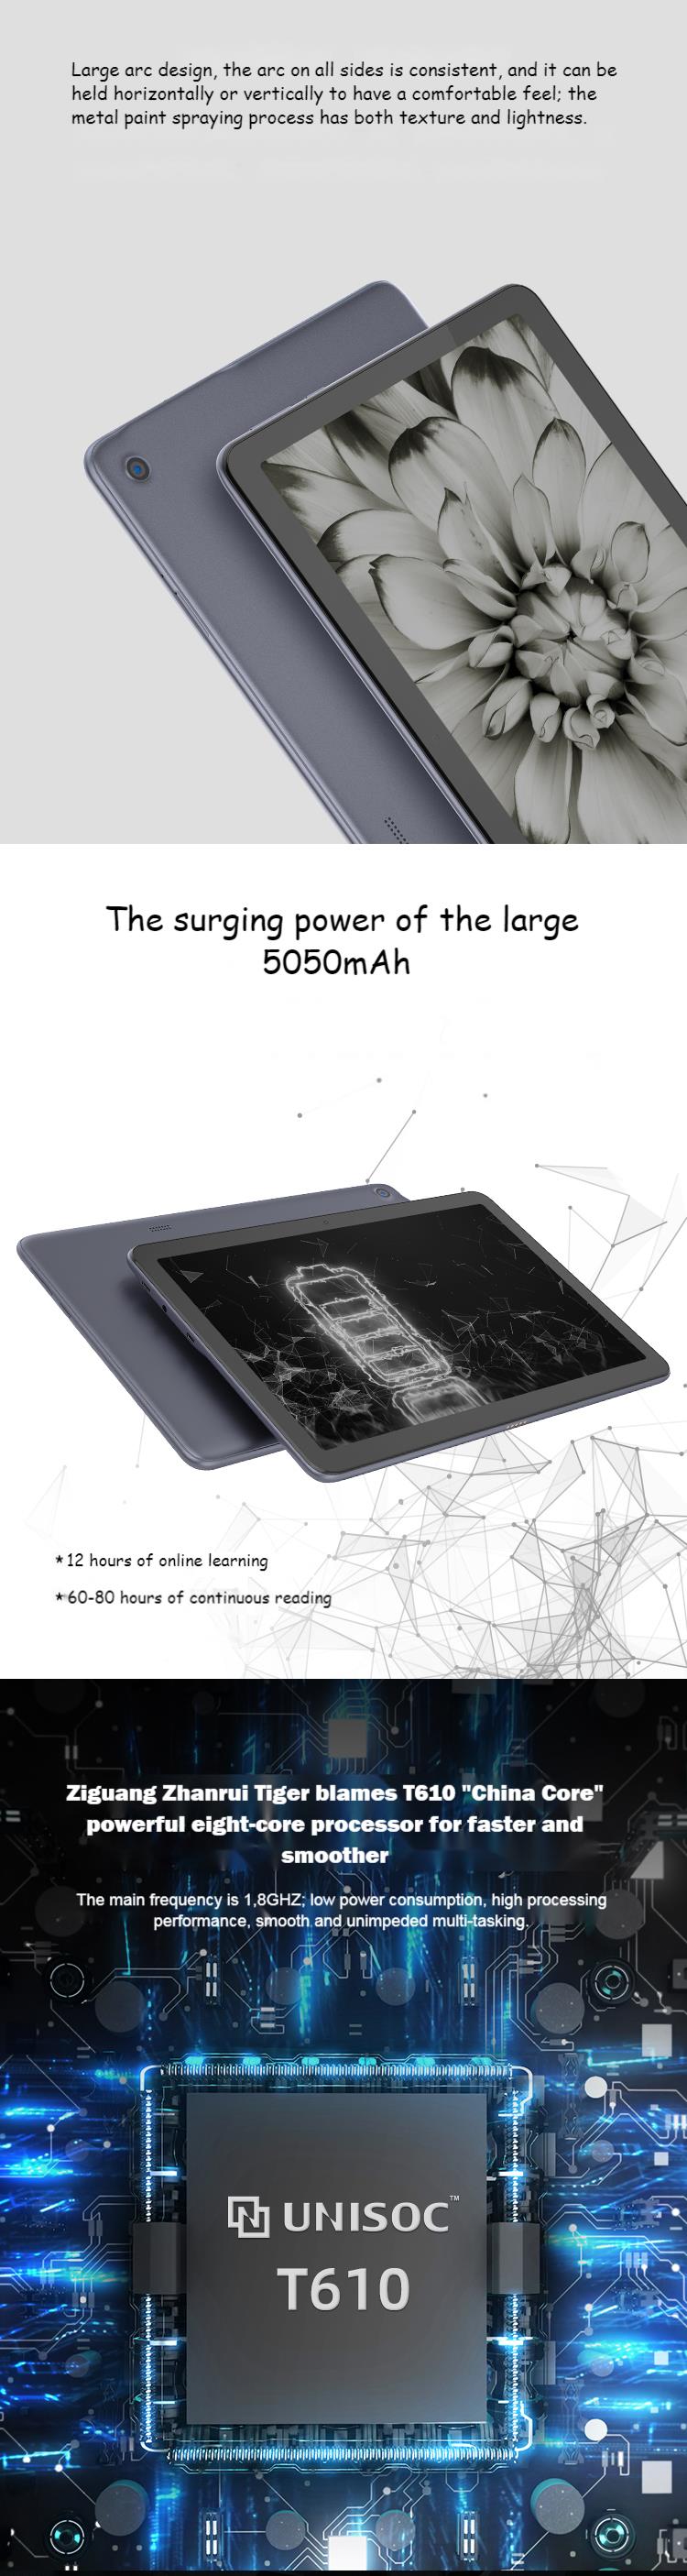 Hisense Q5 10.5 Inch Ink E ink Rlcd Alternative Screen Tablet Protect Eye Androidd10  Single Sim HDMI Ebook Reader Kindle